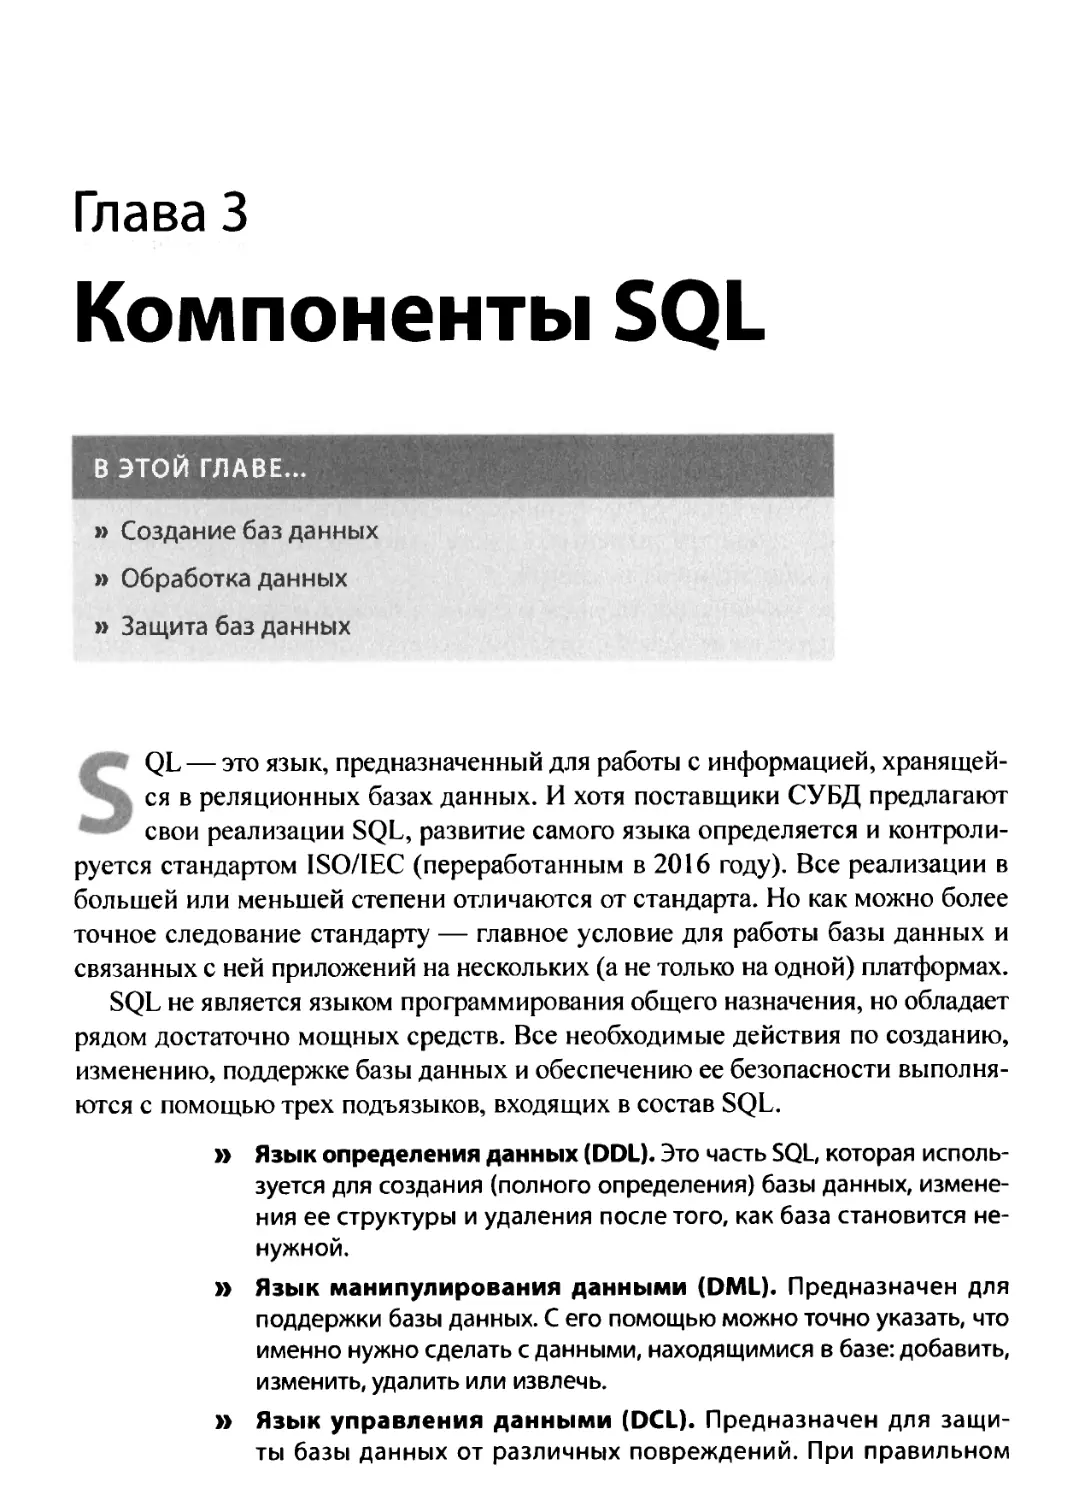 3. Компоненты SQL